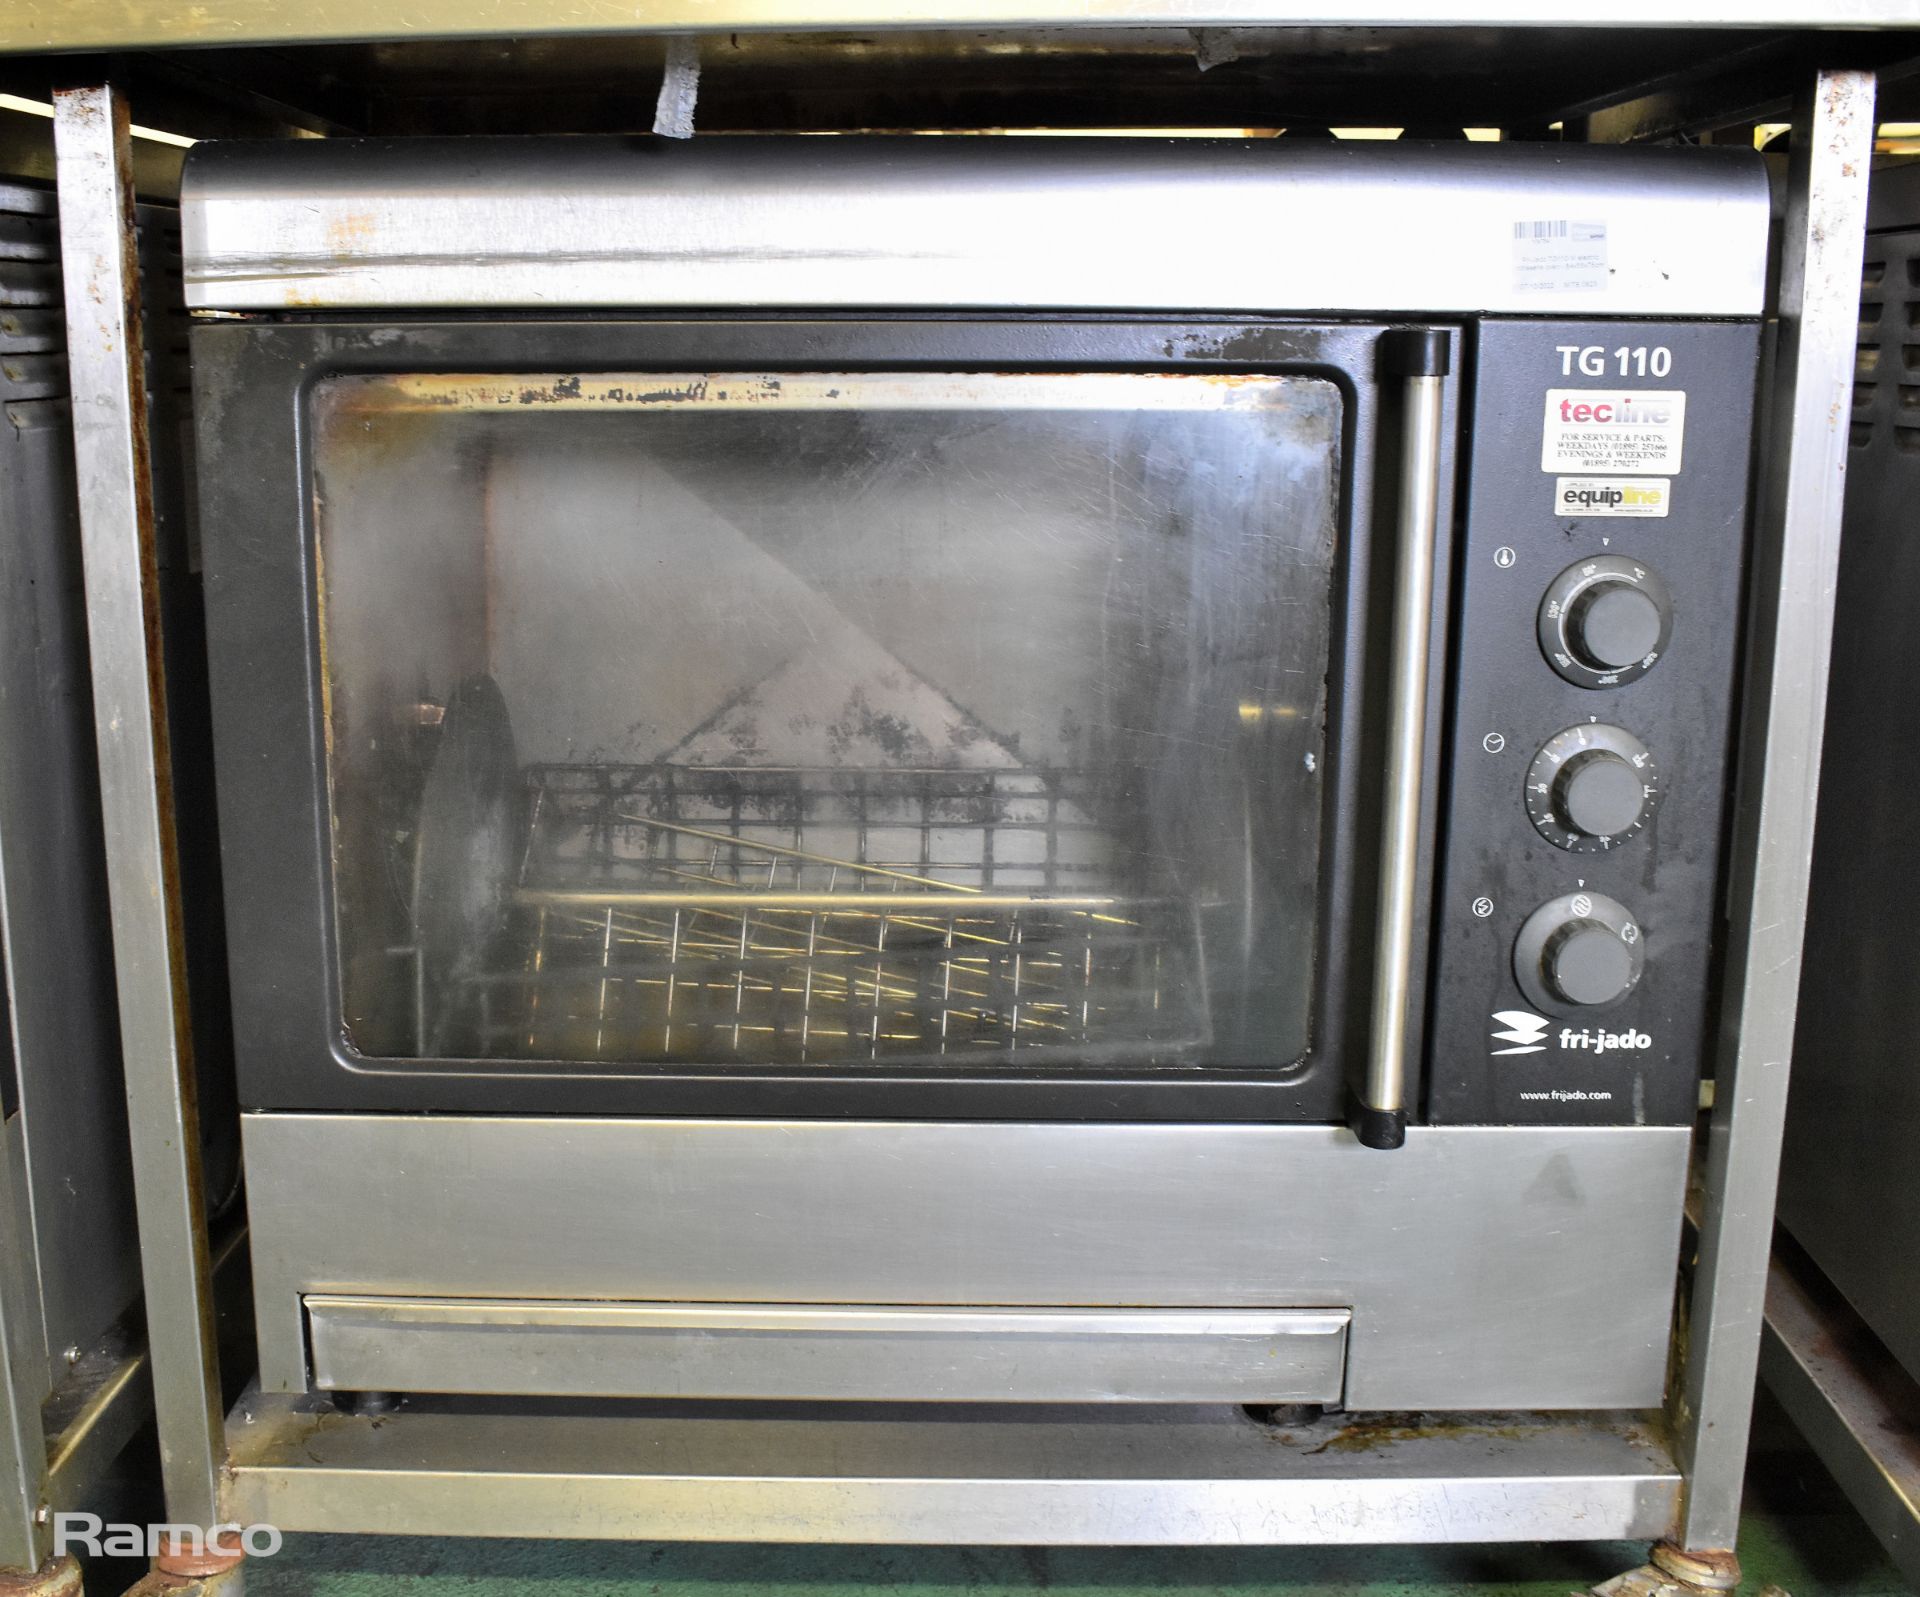 2x Fri-Jado TG110-M electric rotisserie ovens - 84 x 55 x 75cm, Stainless steel trolley - Image 5 of 7